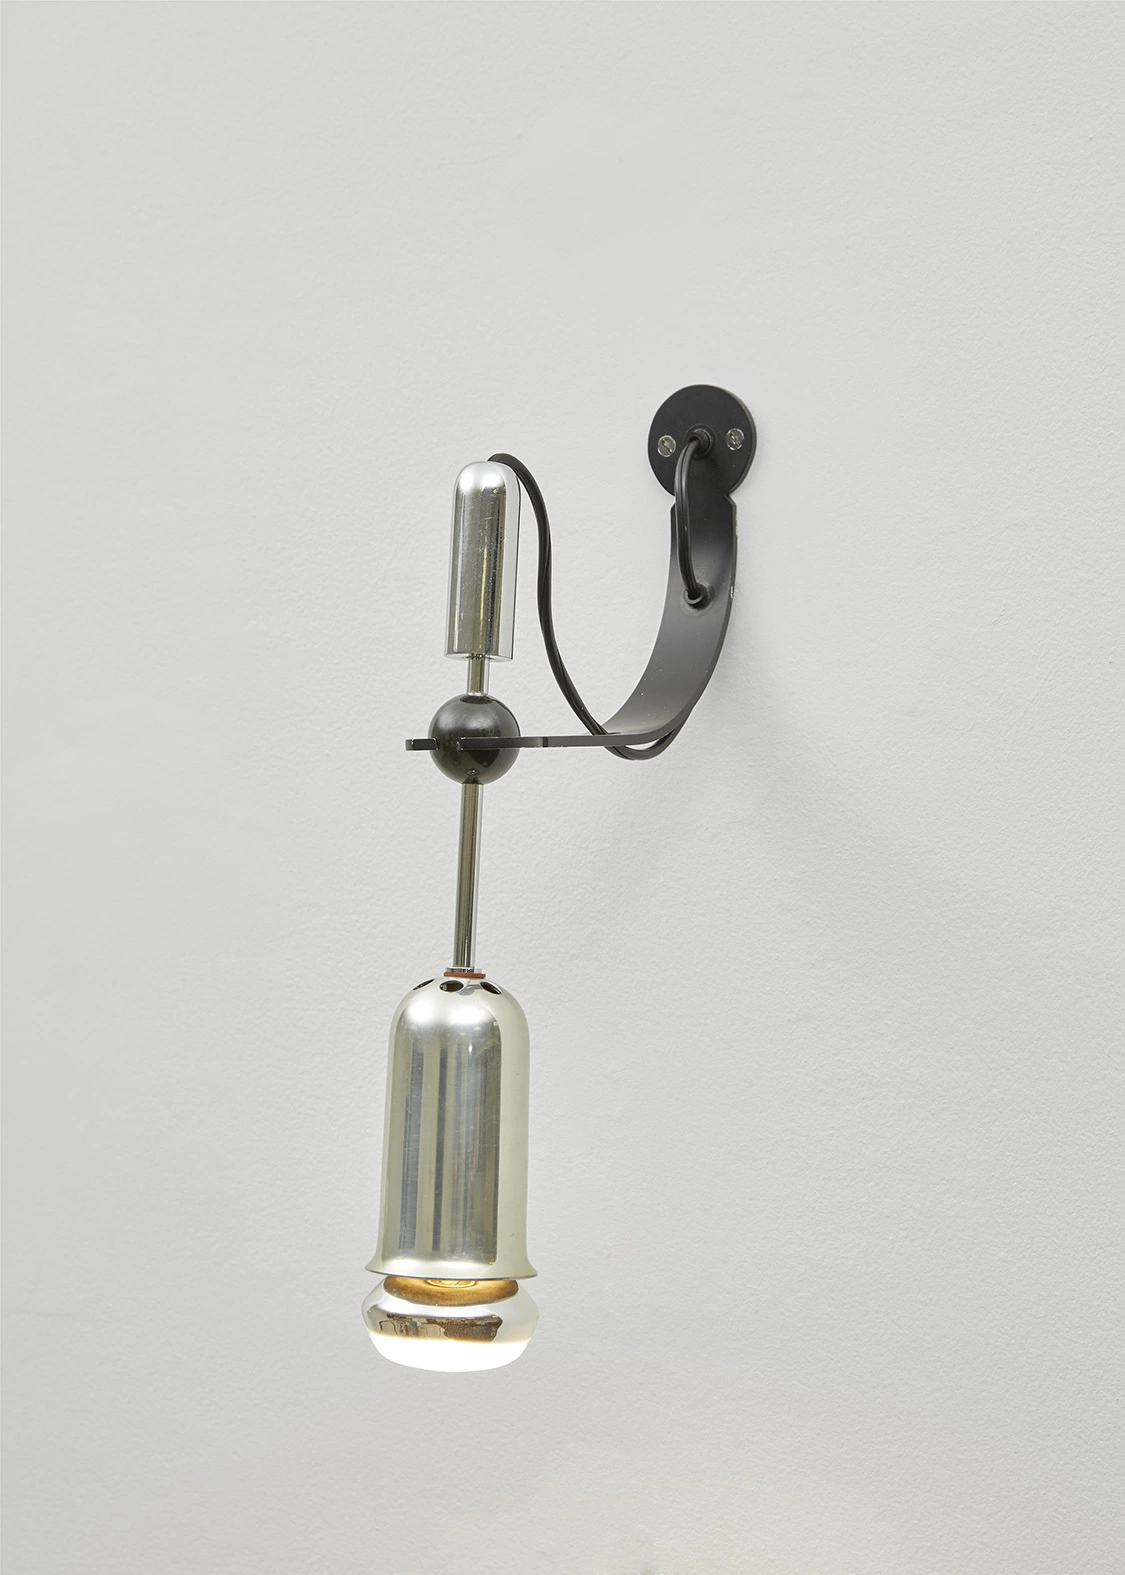 39 - Gino Sarfatti - Wall light - Galerie kreo